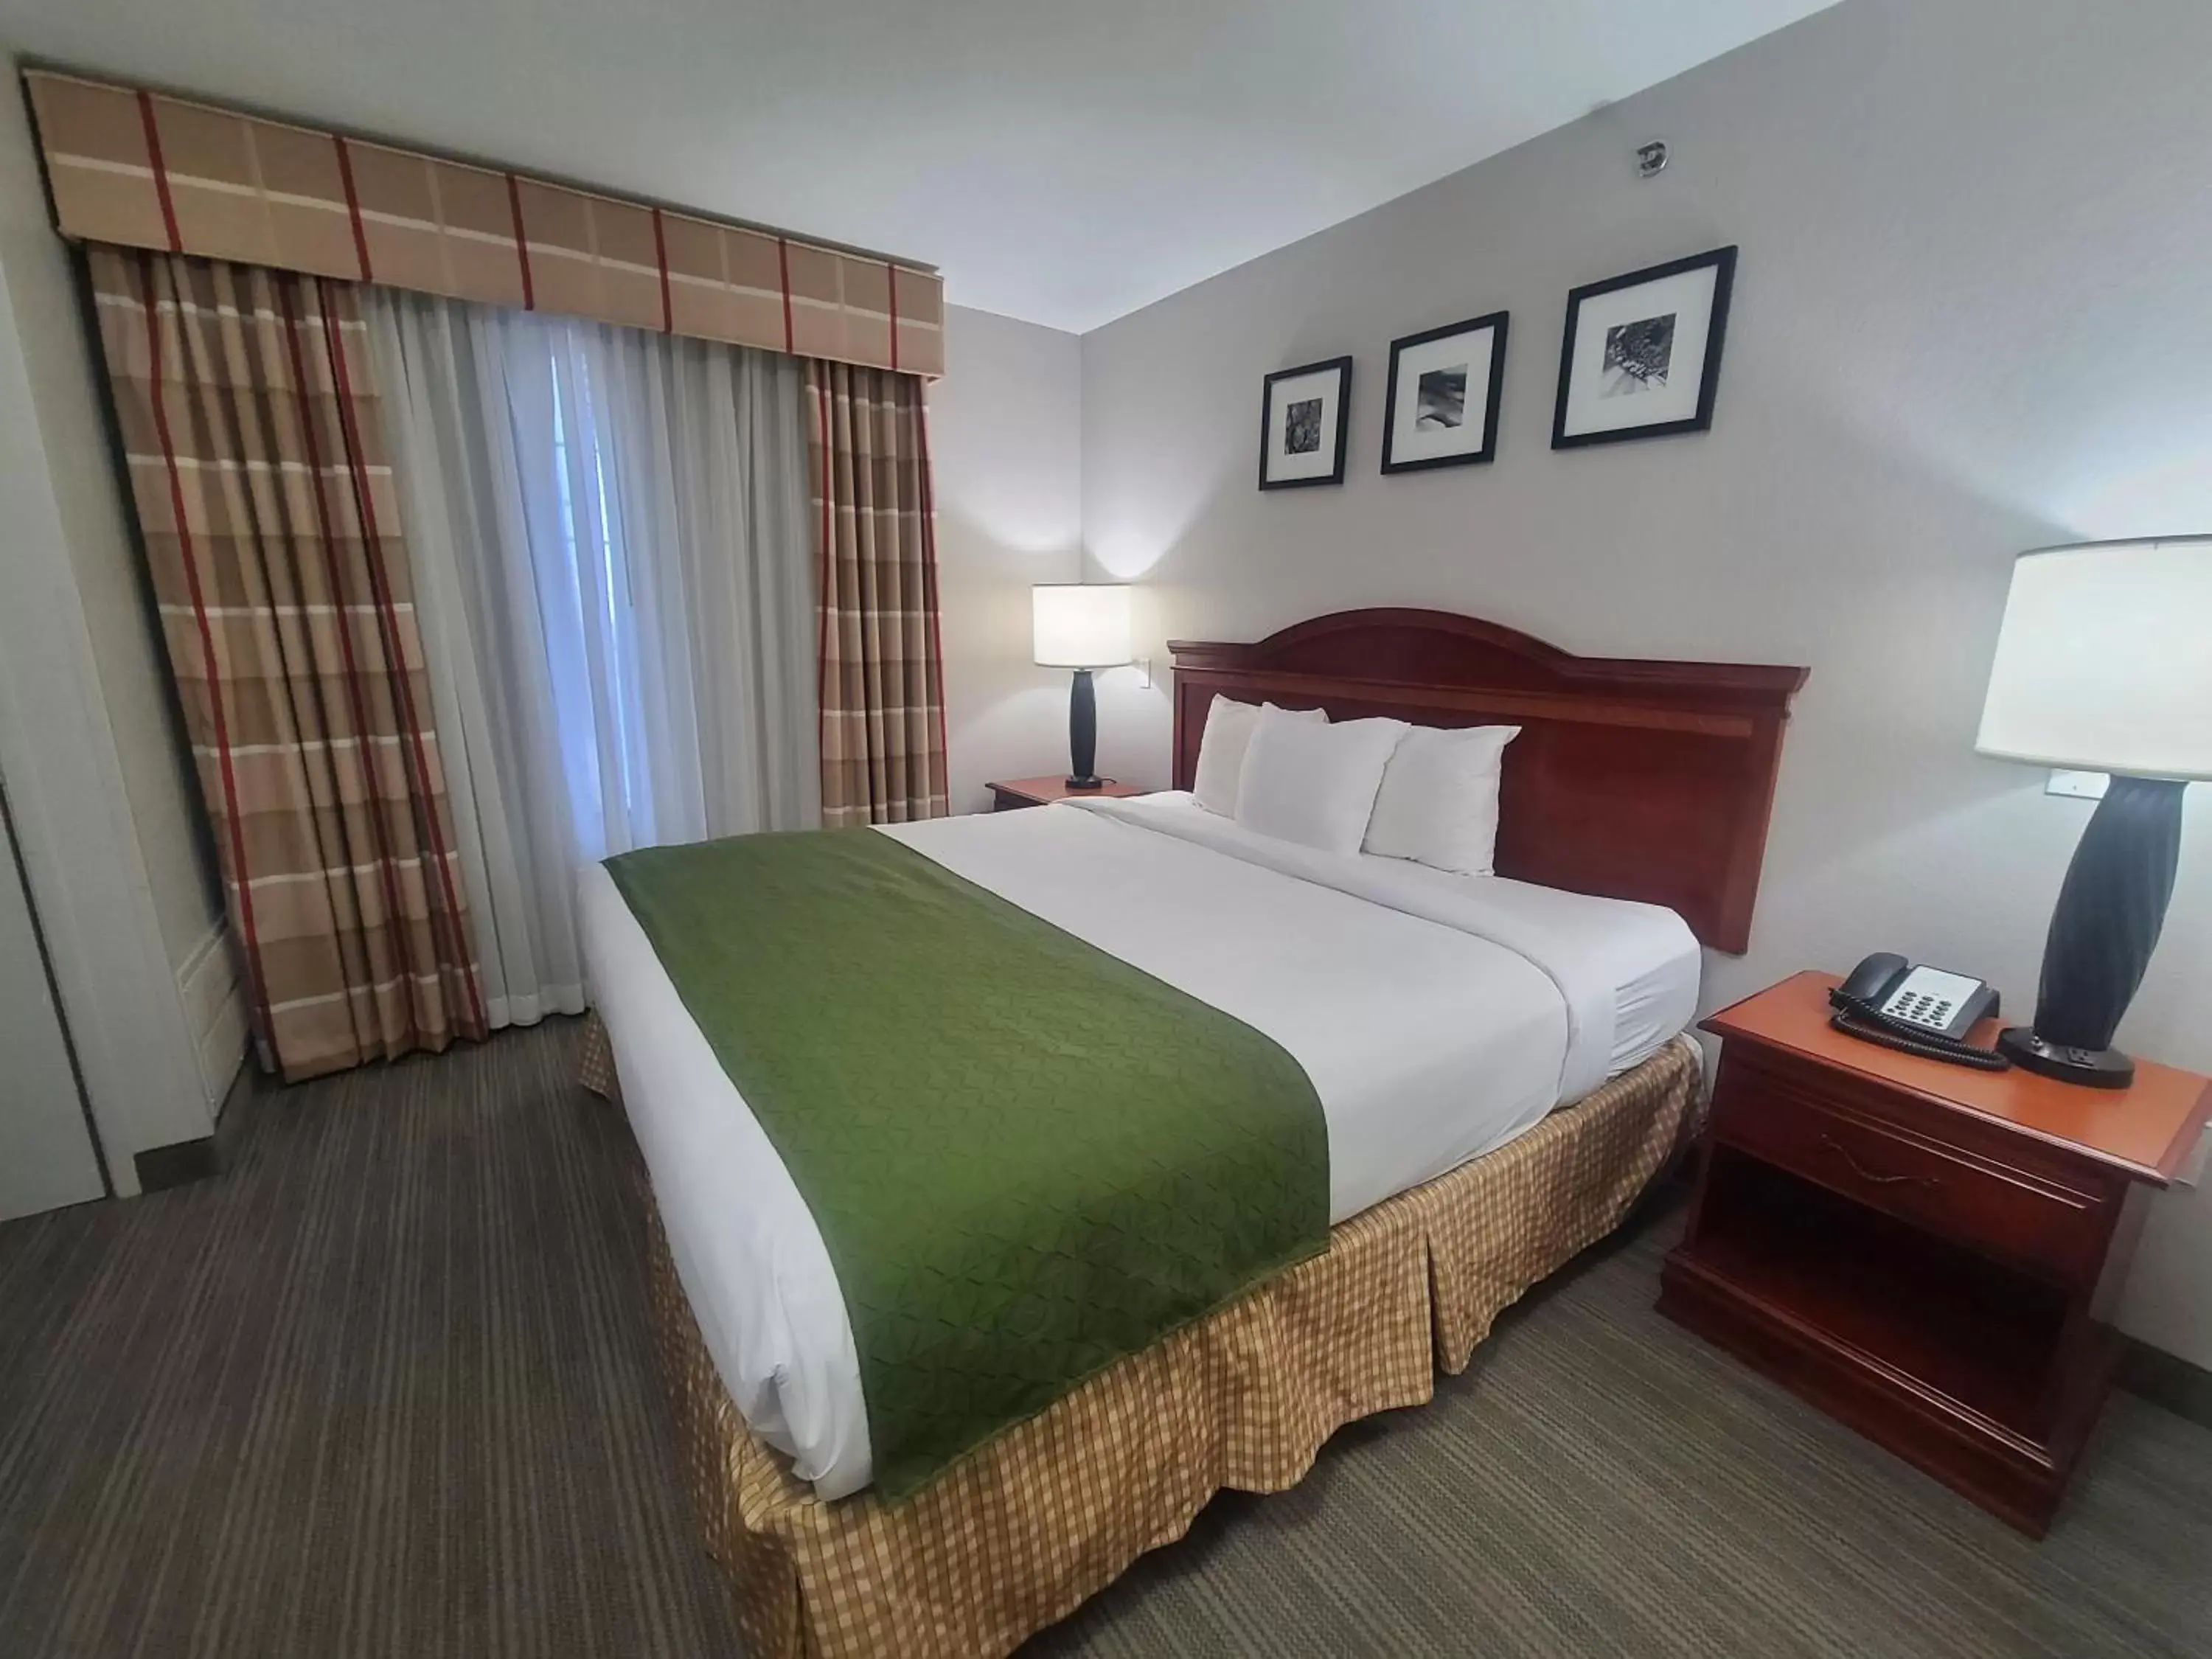 Bedroom in Country Inn & Suites by Radisson, Paducah, KY